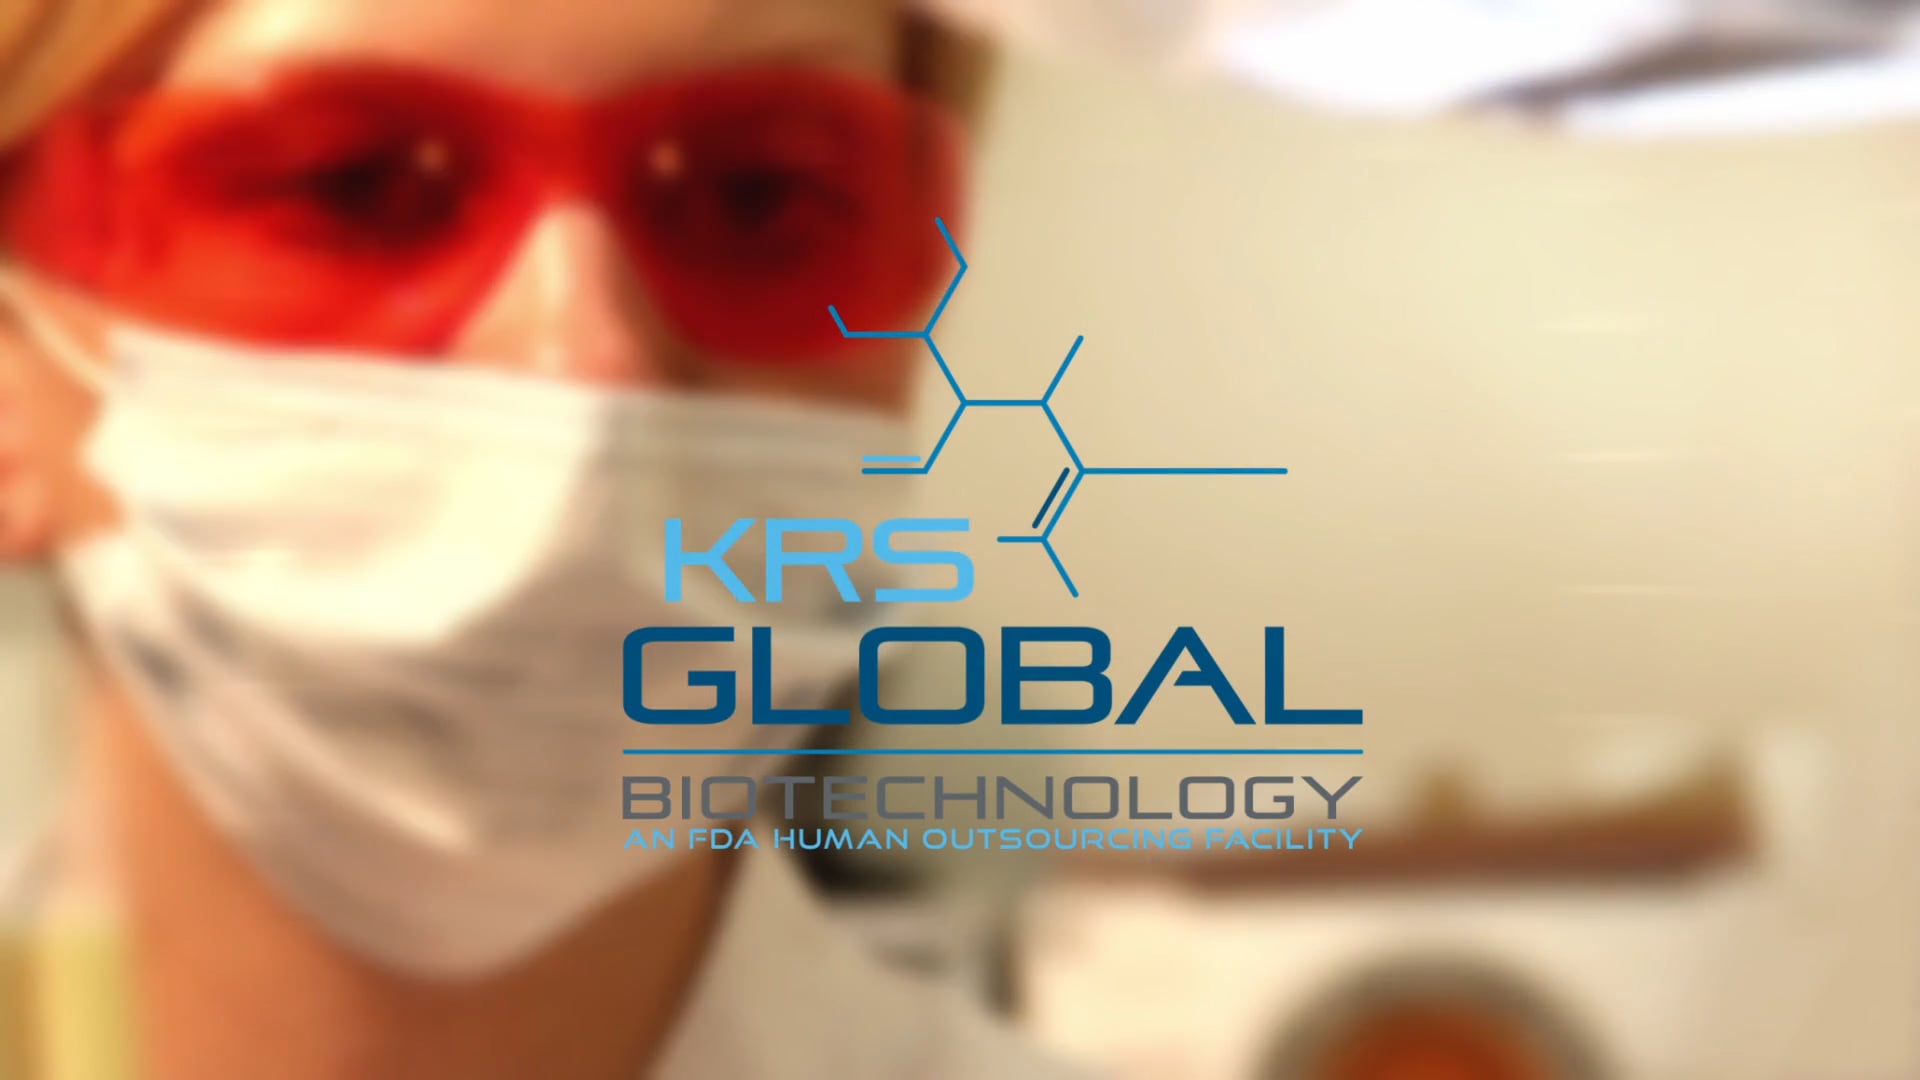 KRS Global Biotechnology Corporate VideoHD on Vimeo